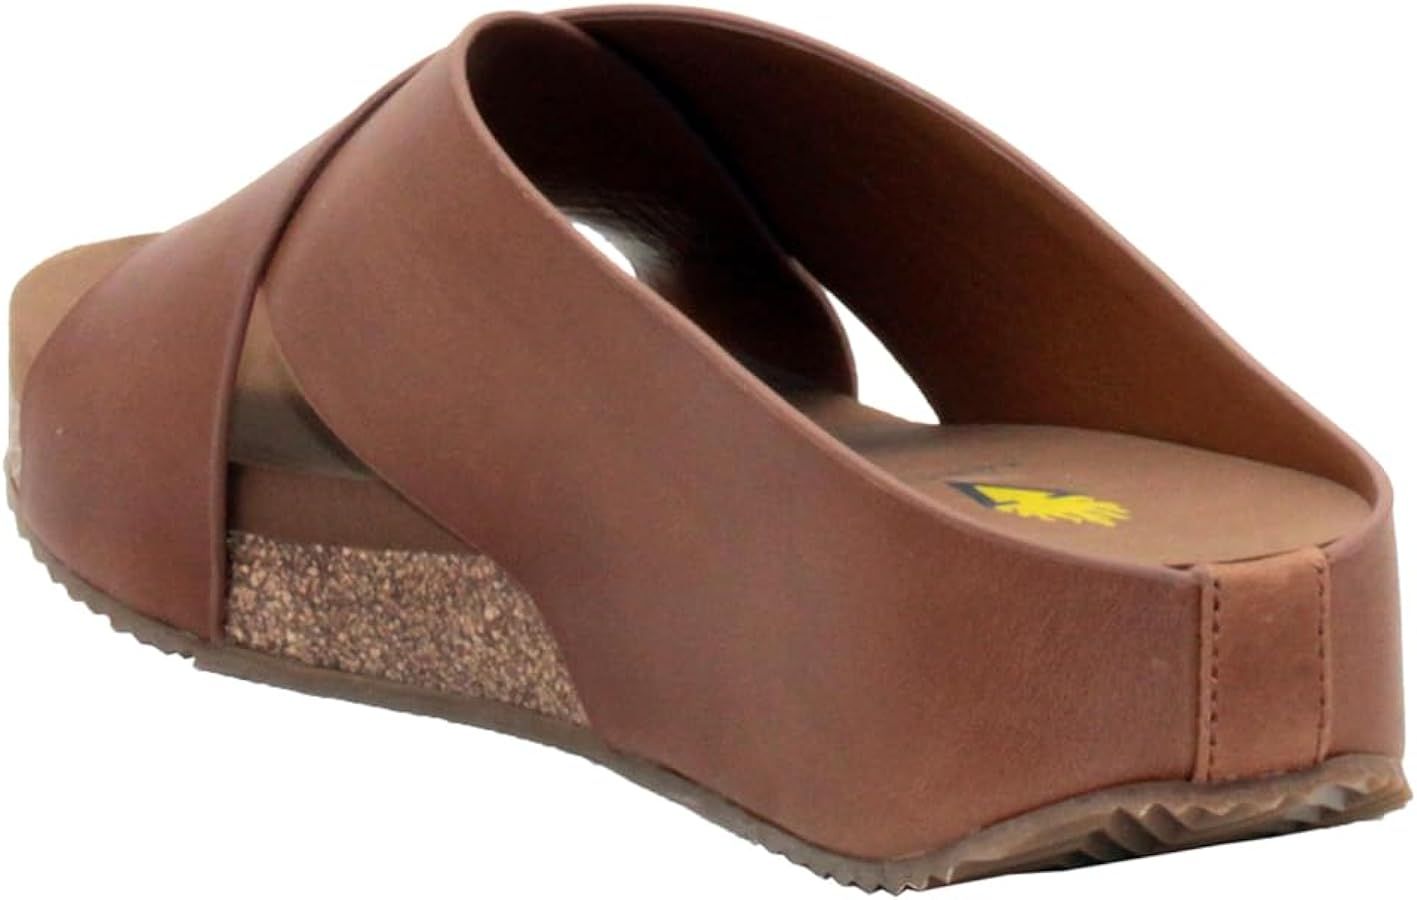 VOLATILE Womens Ablette Slide Athletic Sandals Casual Low Heel 1-2" - Beige | Amazon (US)